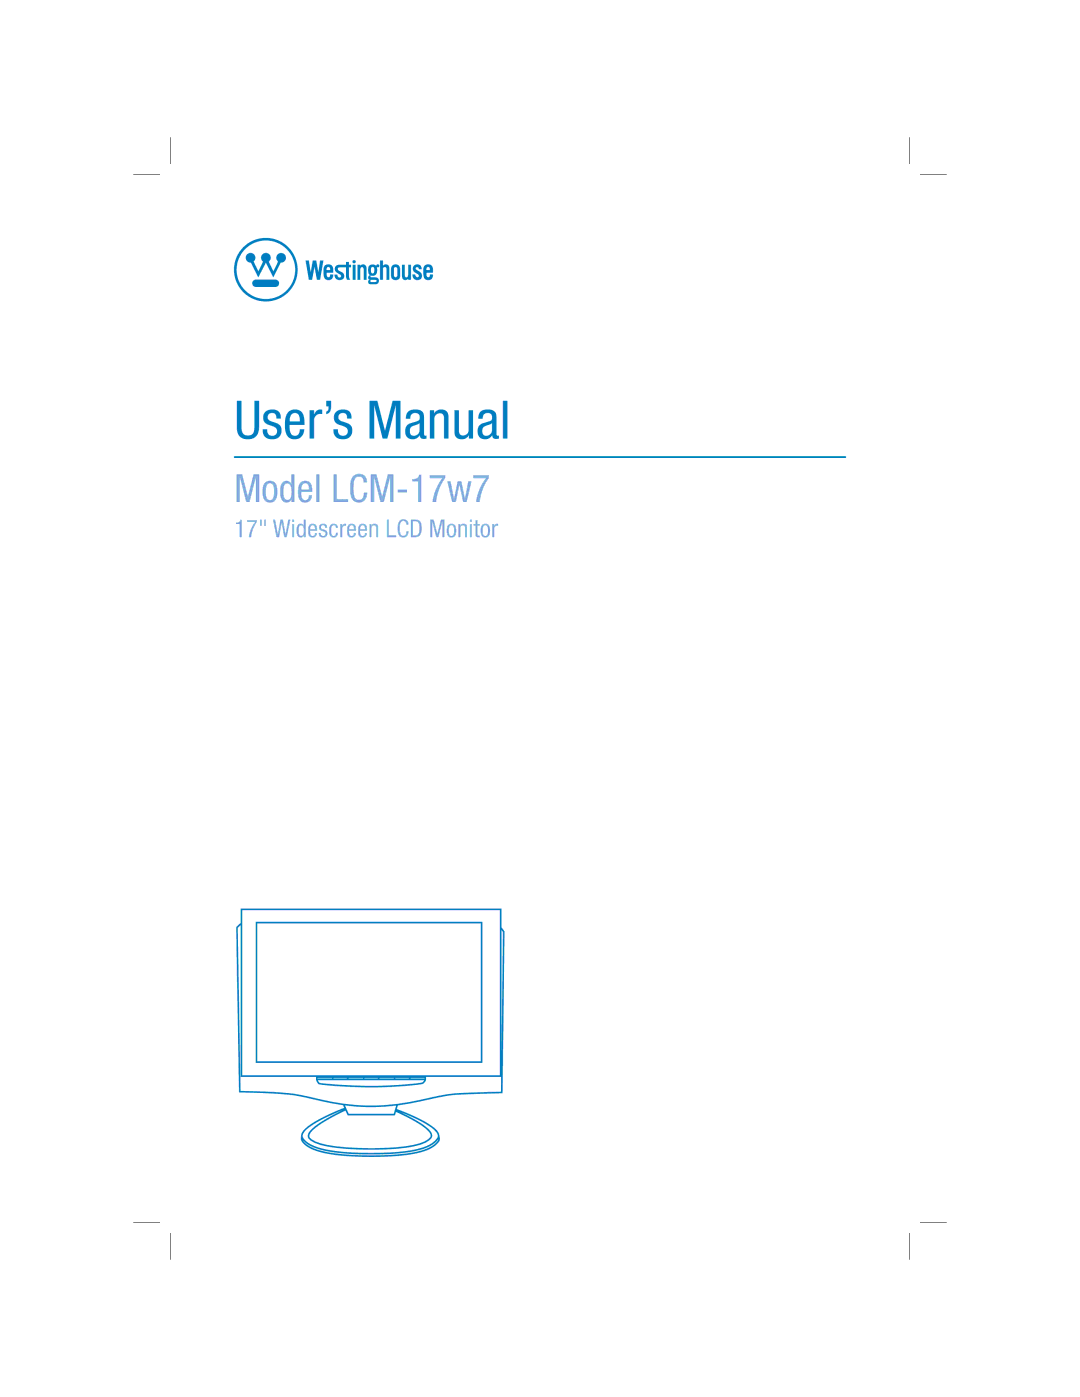 Westinghouse LCM-17W7 user manual User’s Manual 